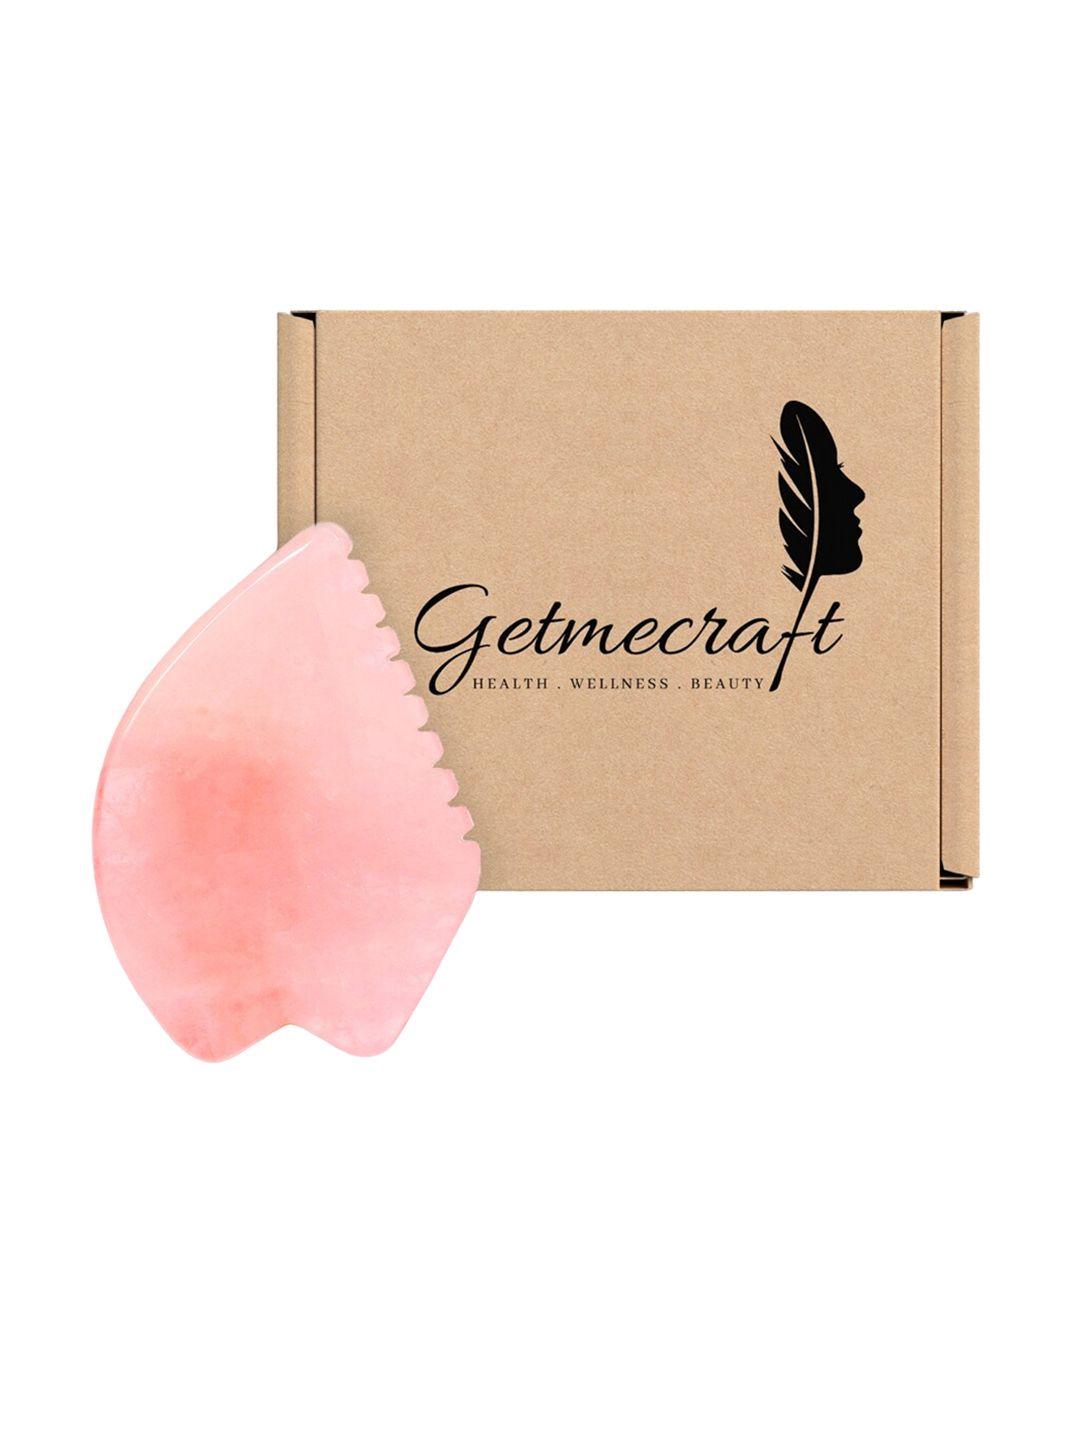 getmecraft rose quartz leaf shape gua sha facial massage tool with teeth shape edges